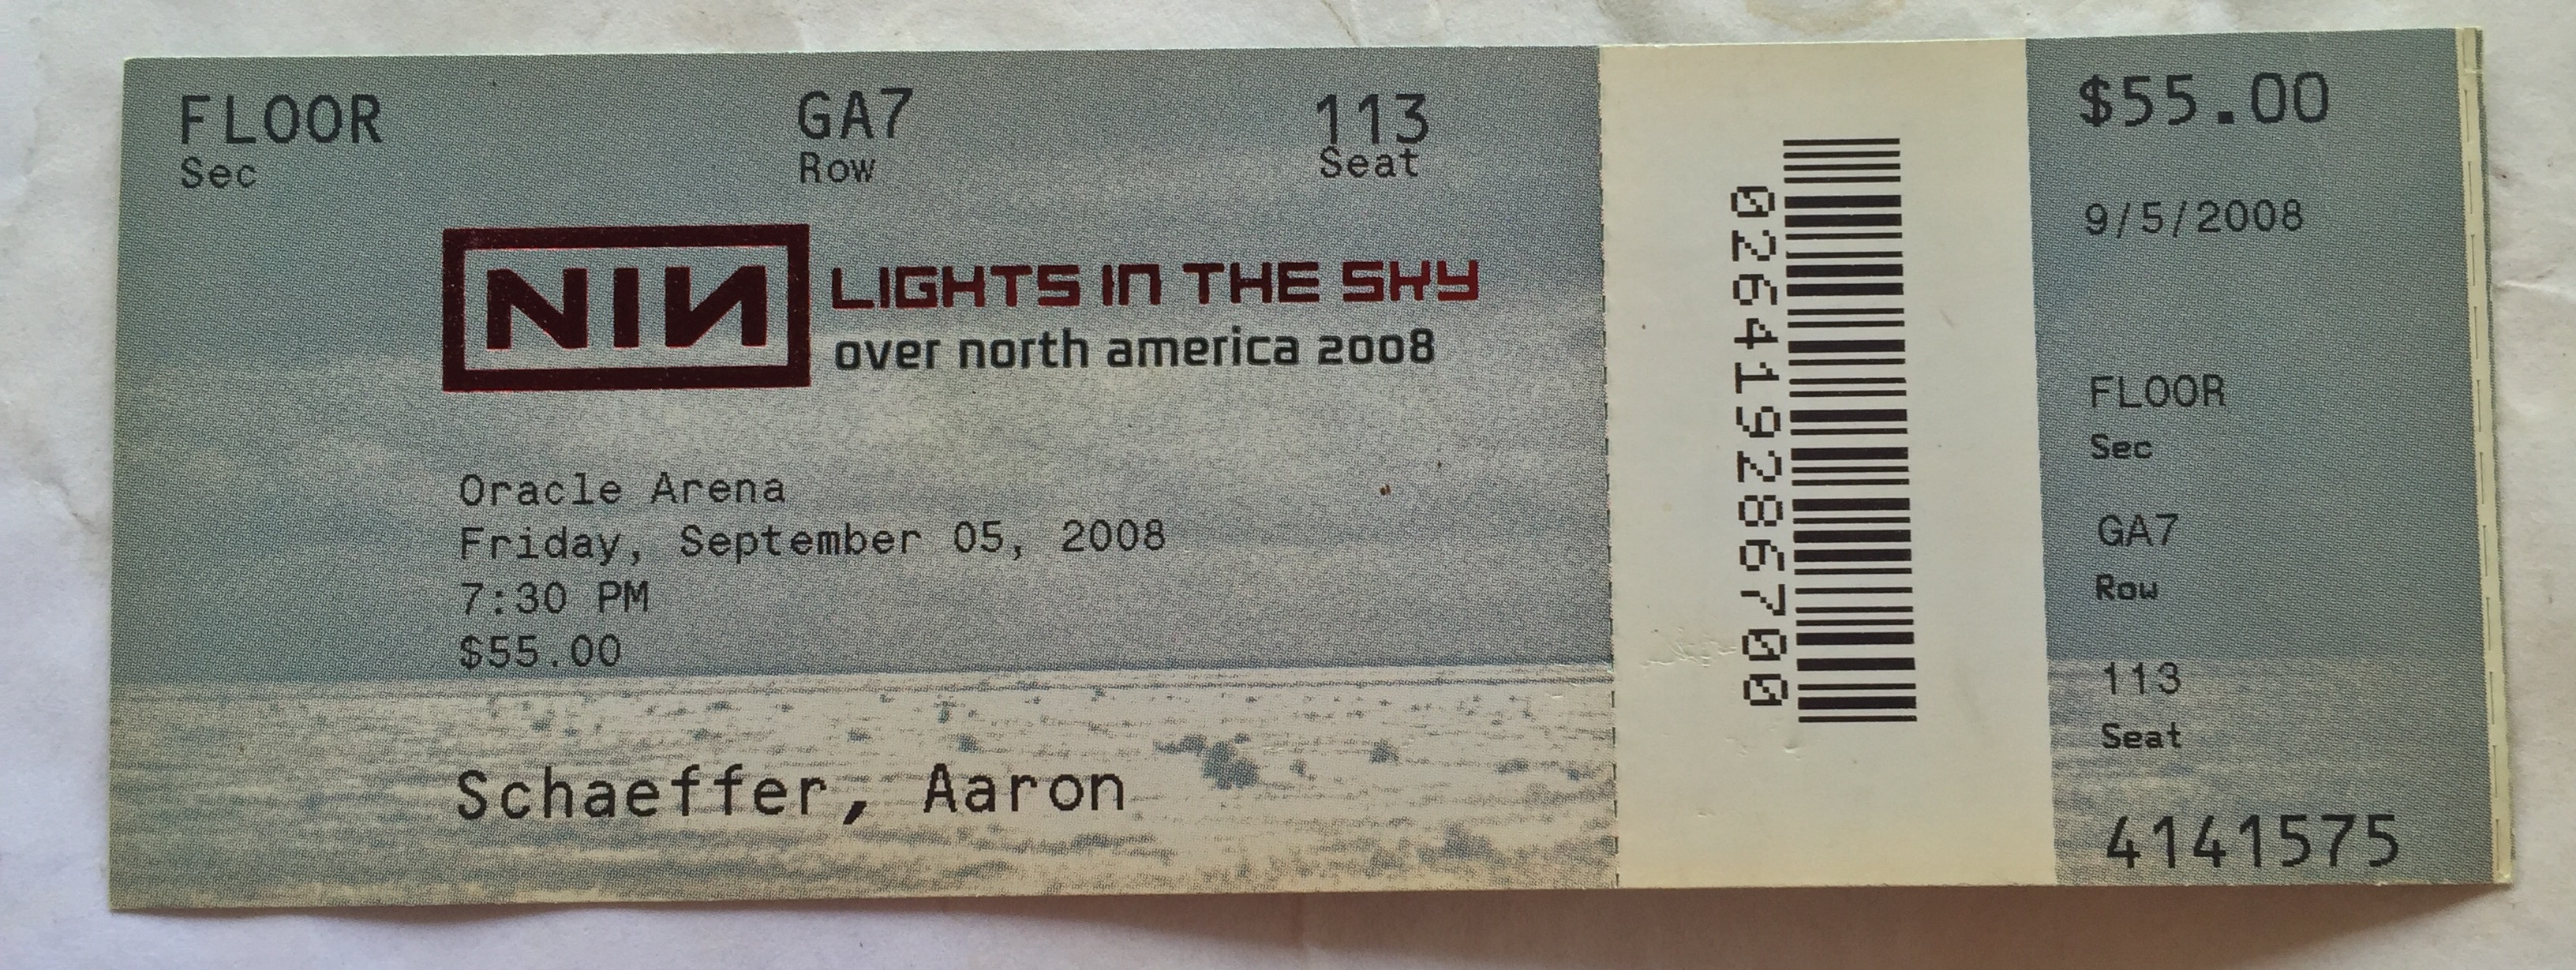 2008/09/05 Ticket